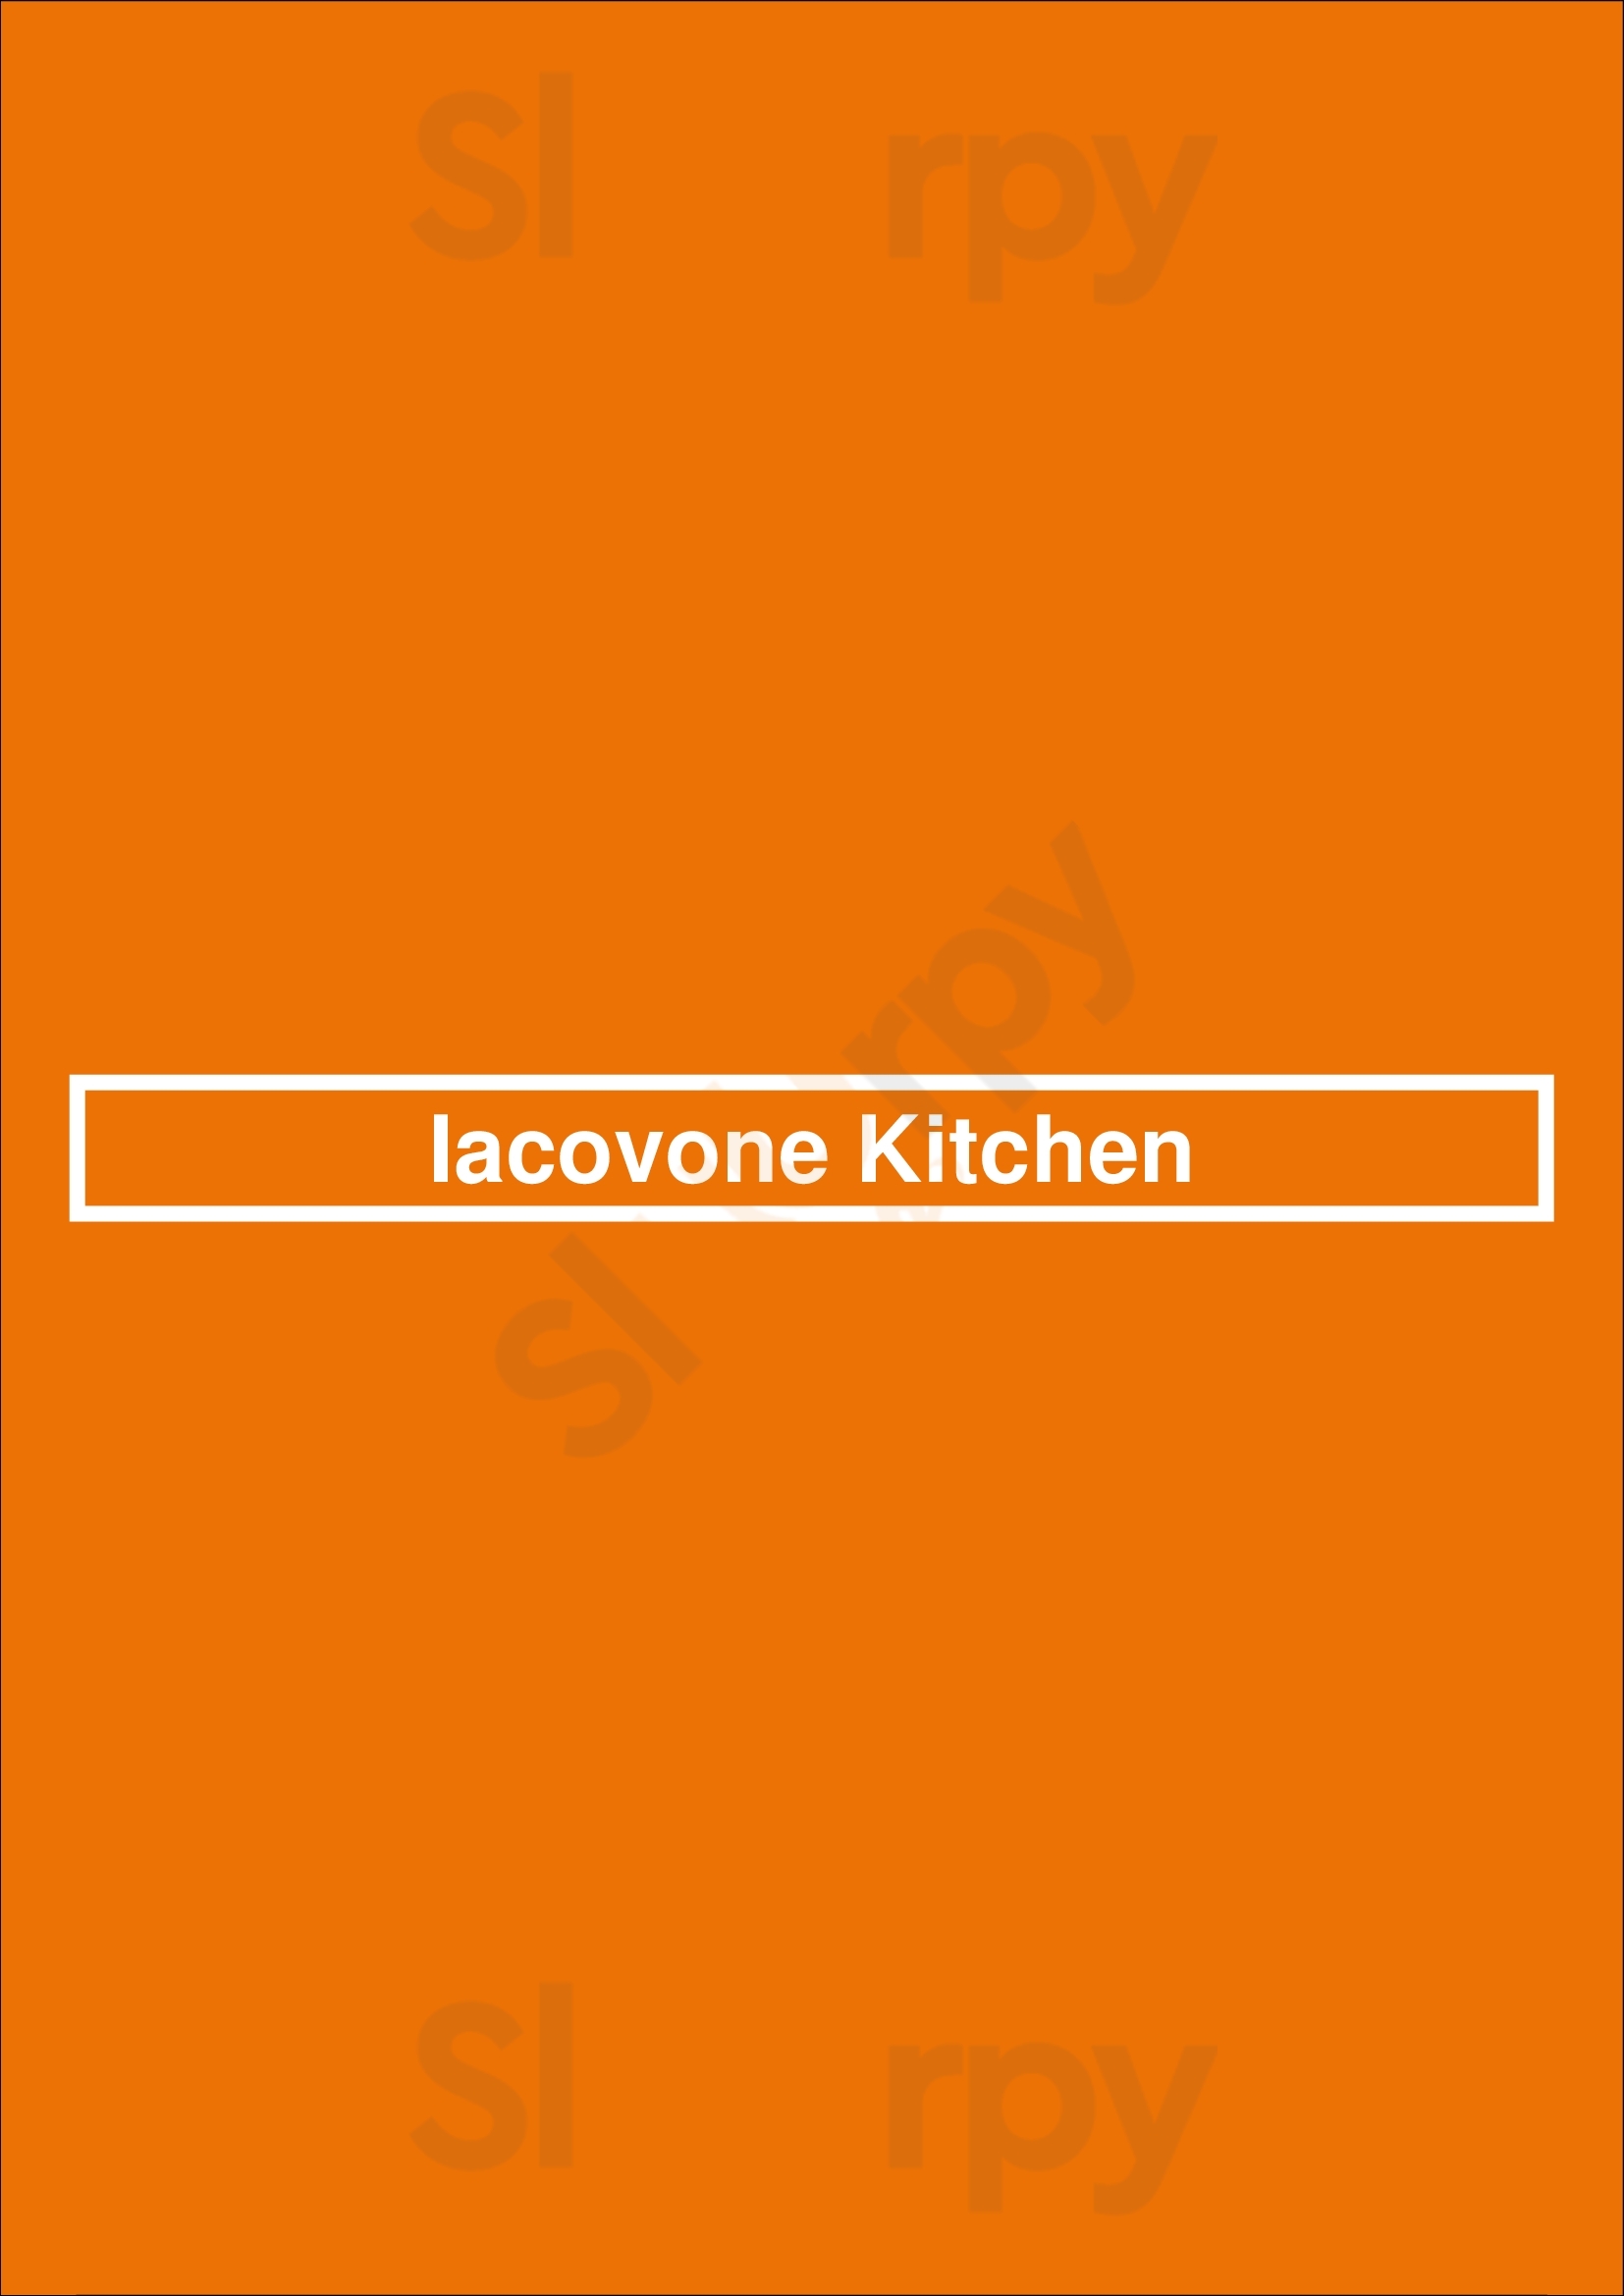 Iacovone Kitchen New Orleans Menu - 1